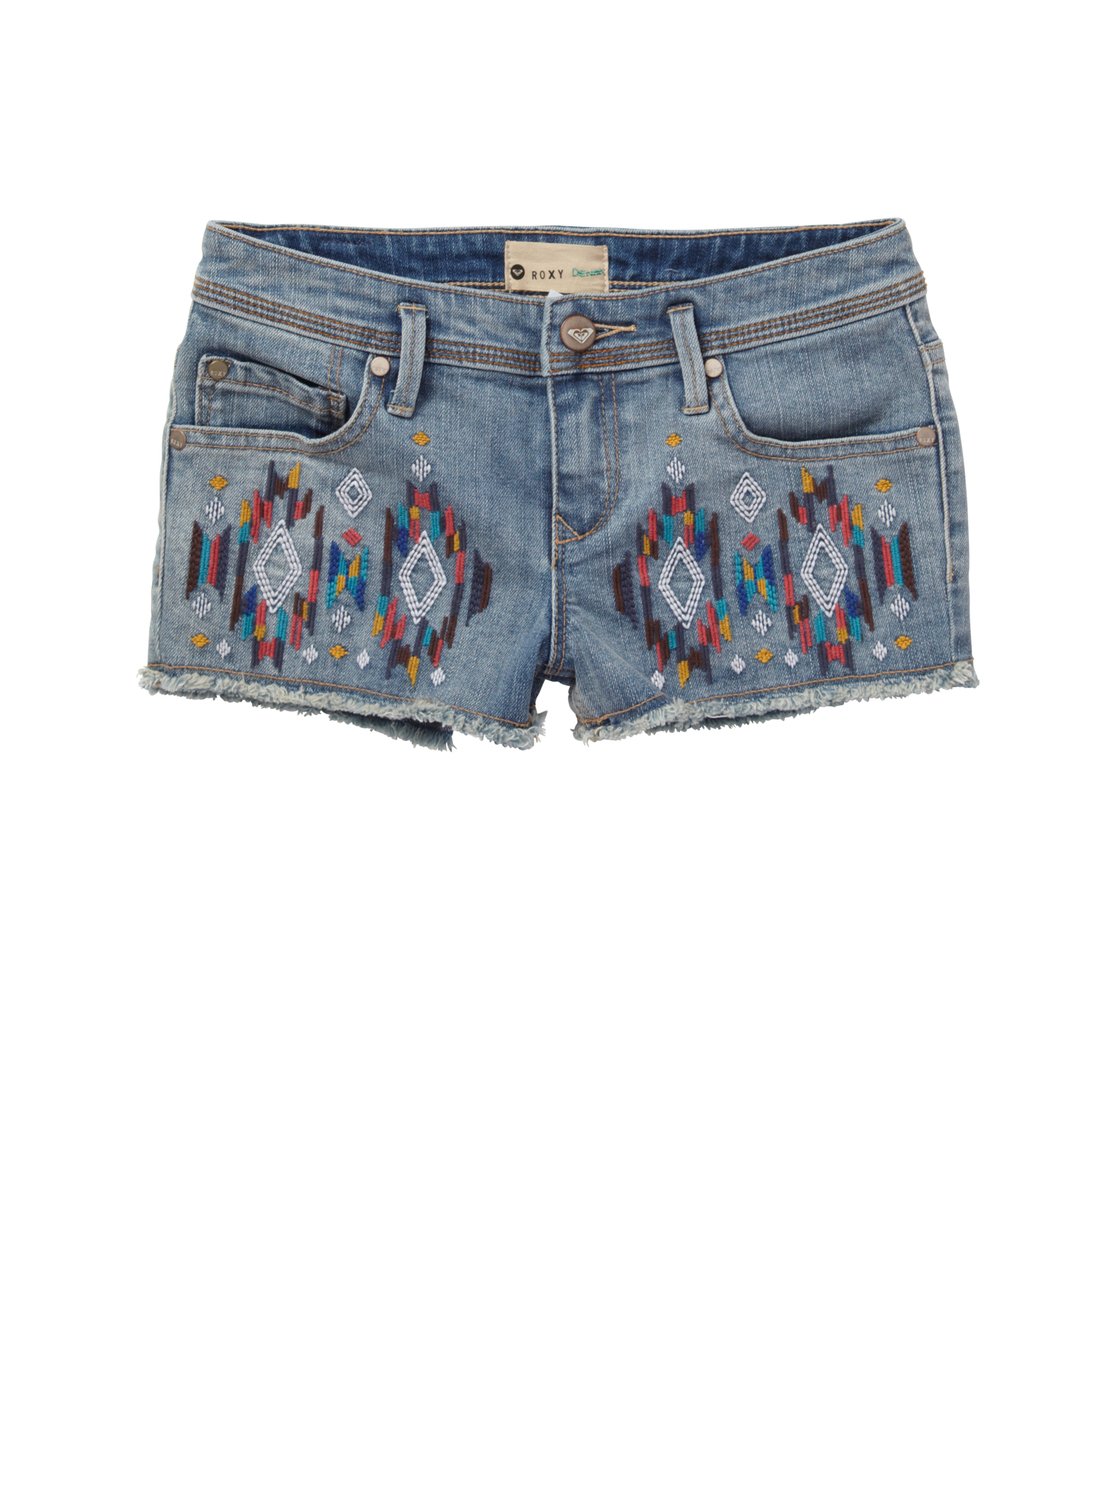 Girls 7-14 Blaze Embroidered Shorts ARGDS00009 | Roxy